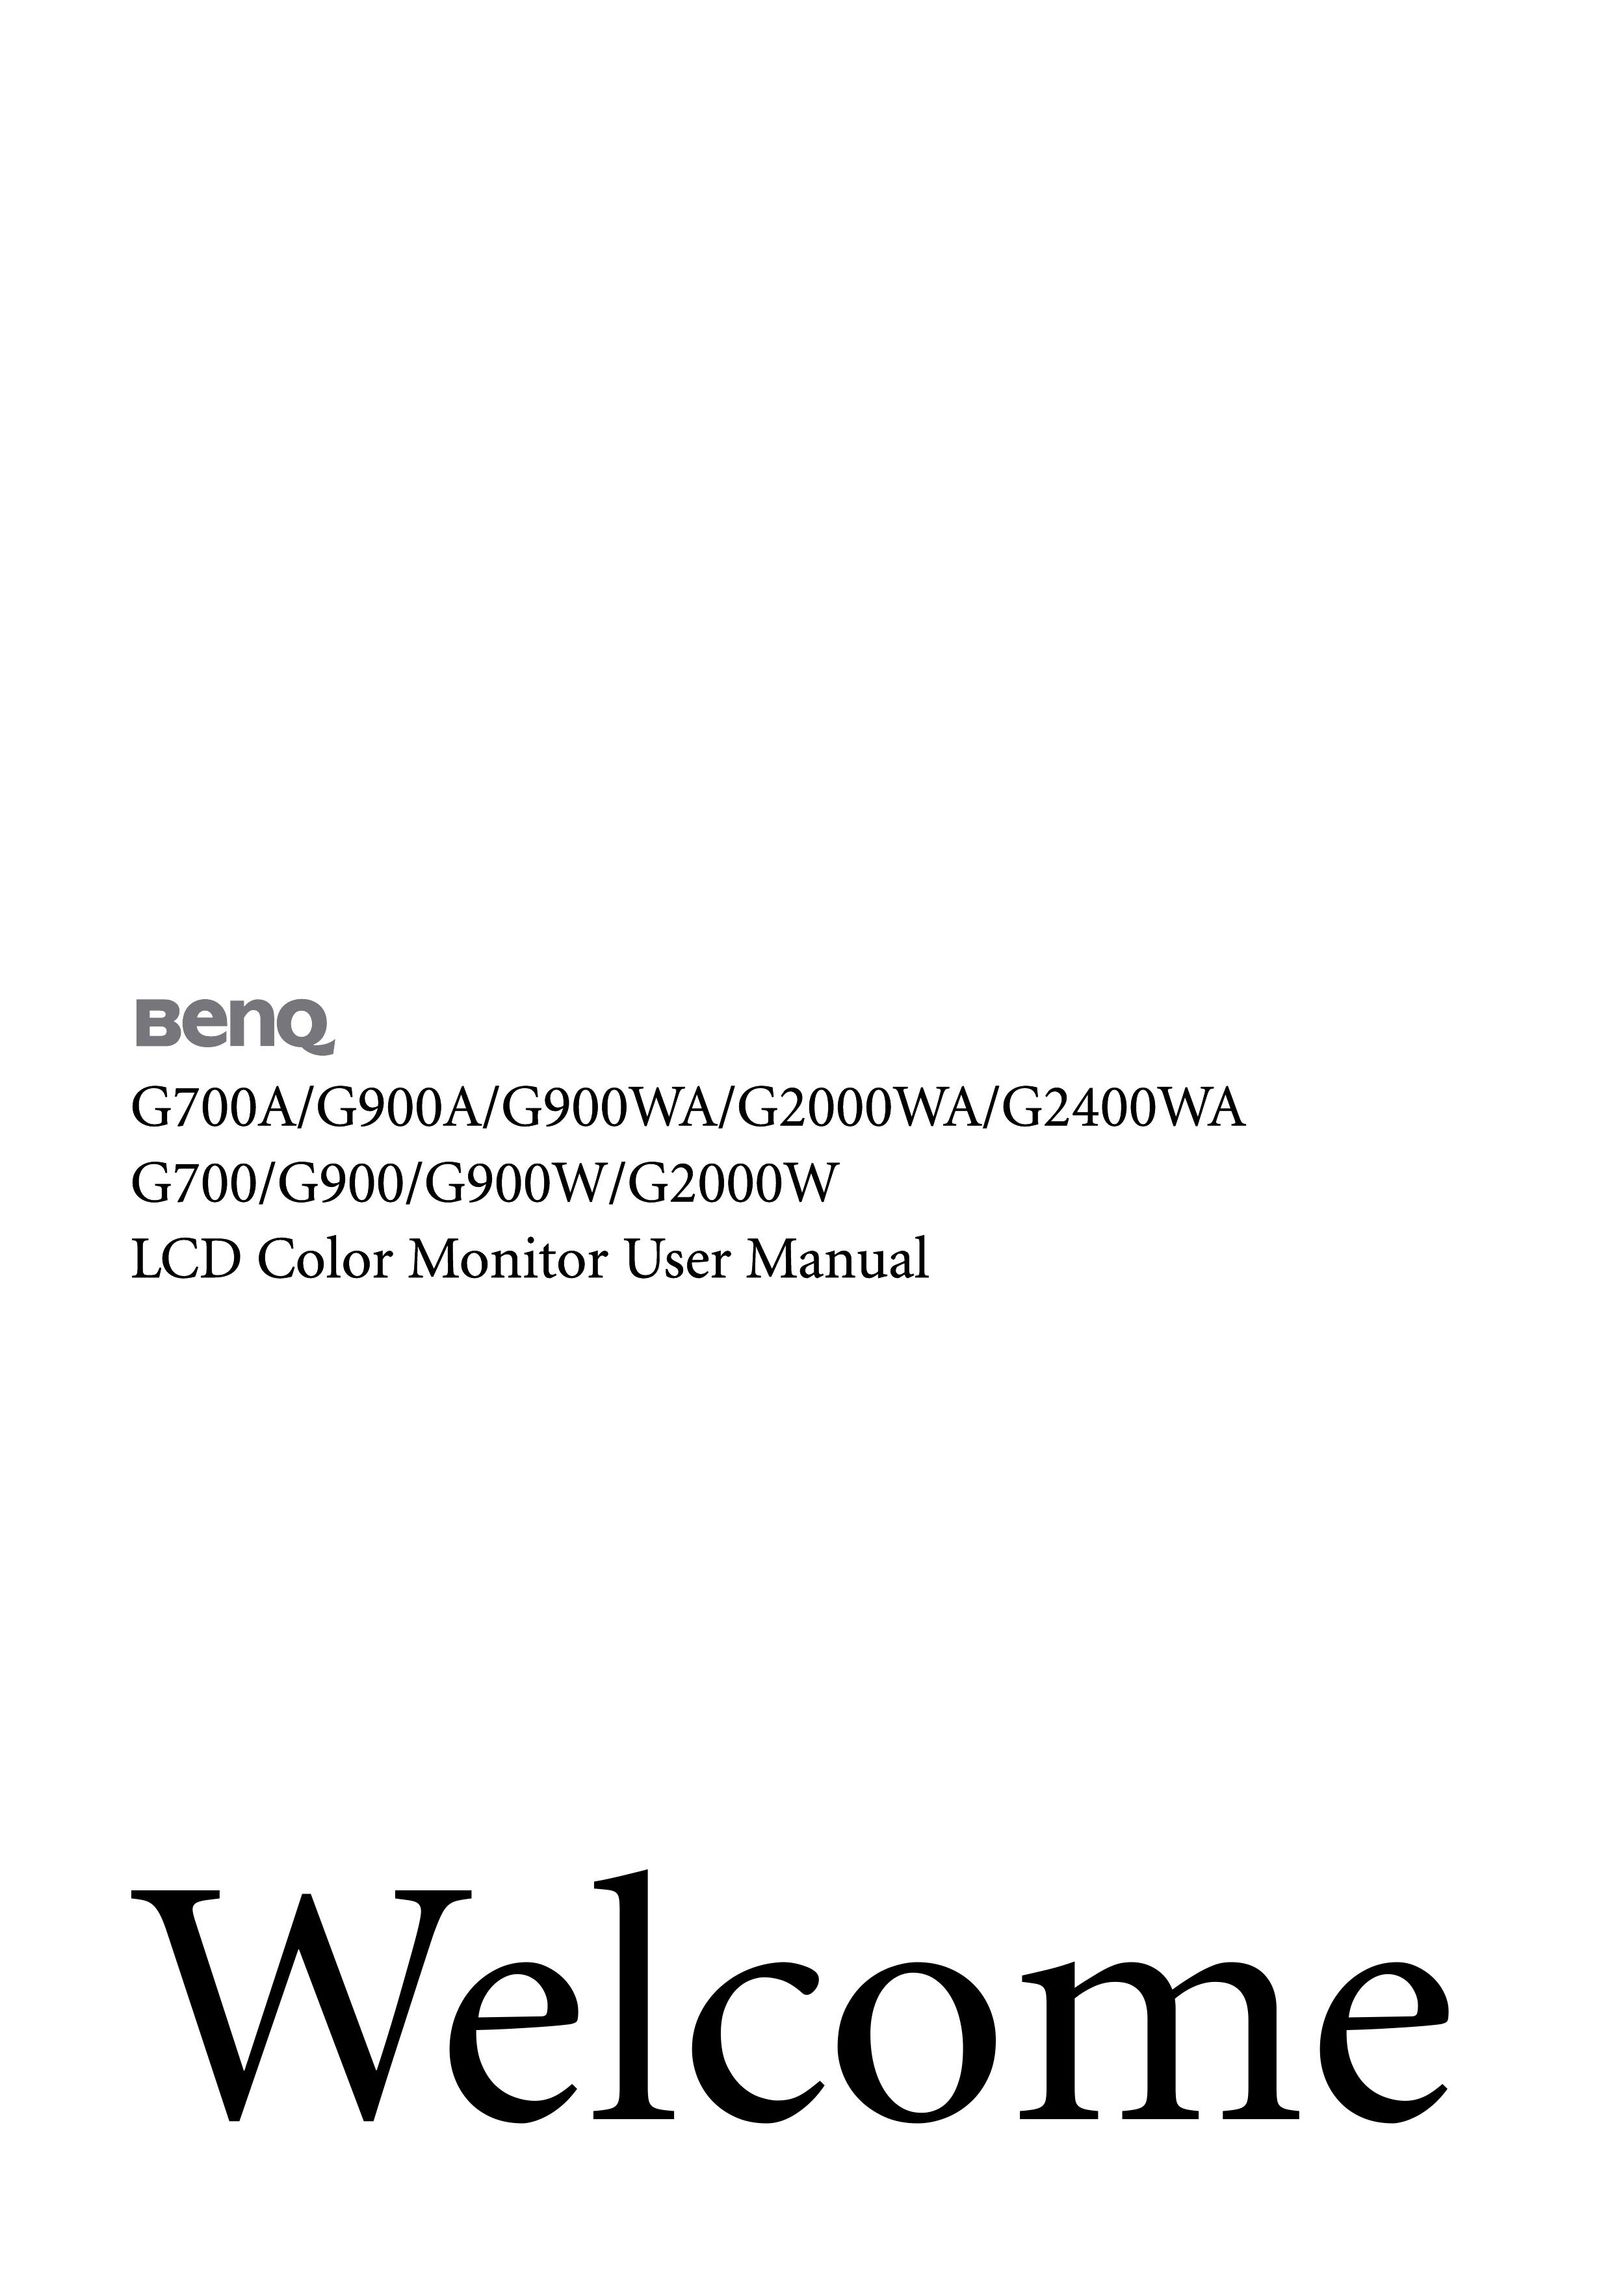 BenQ G2000WA Car Video System User Manual